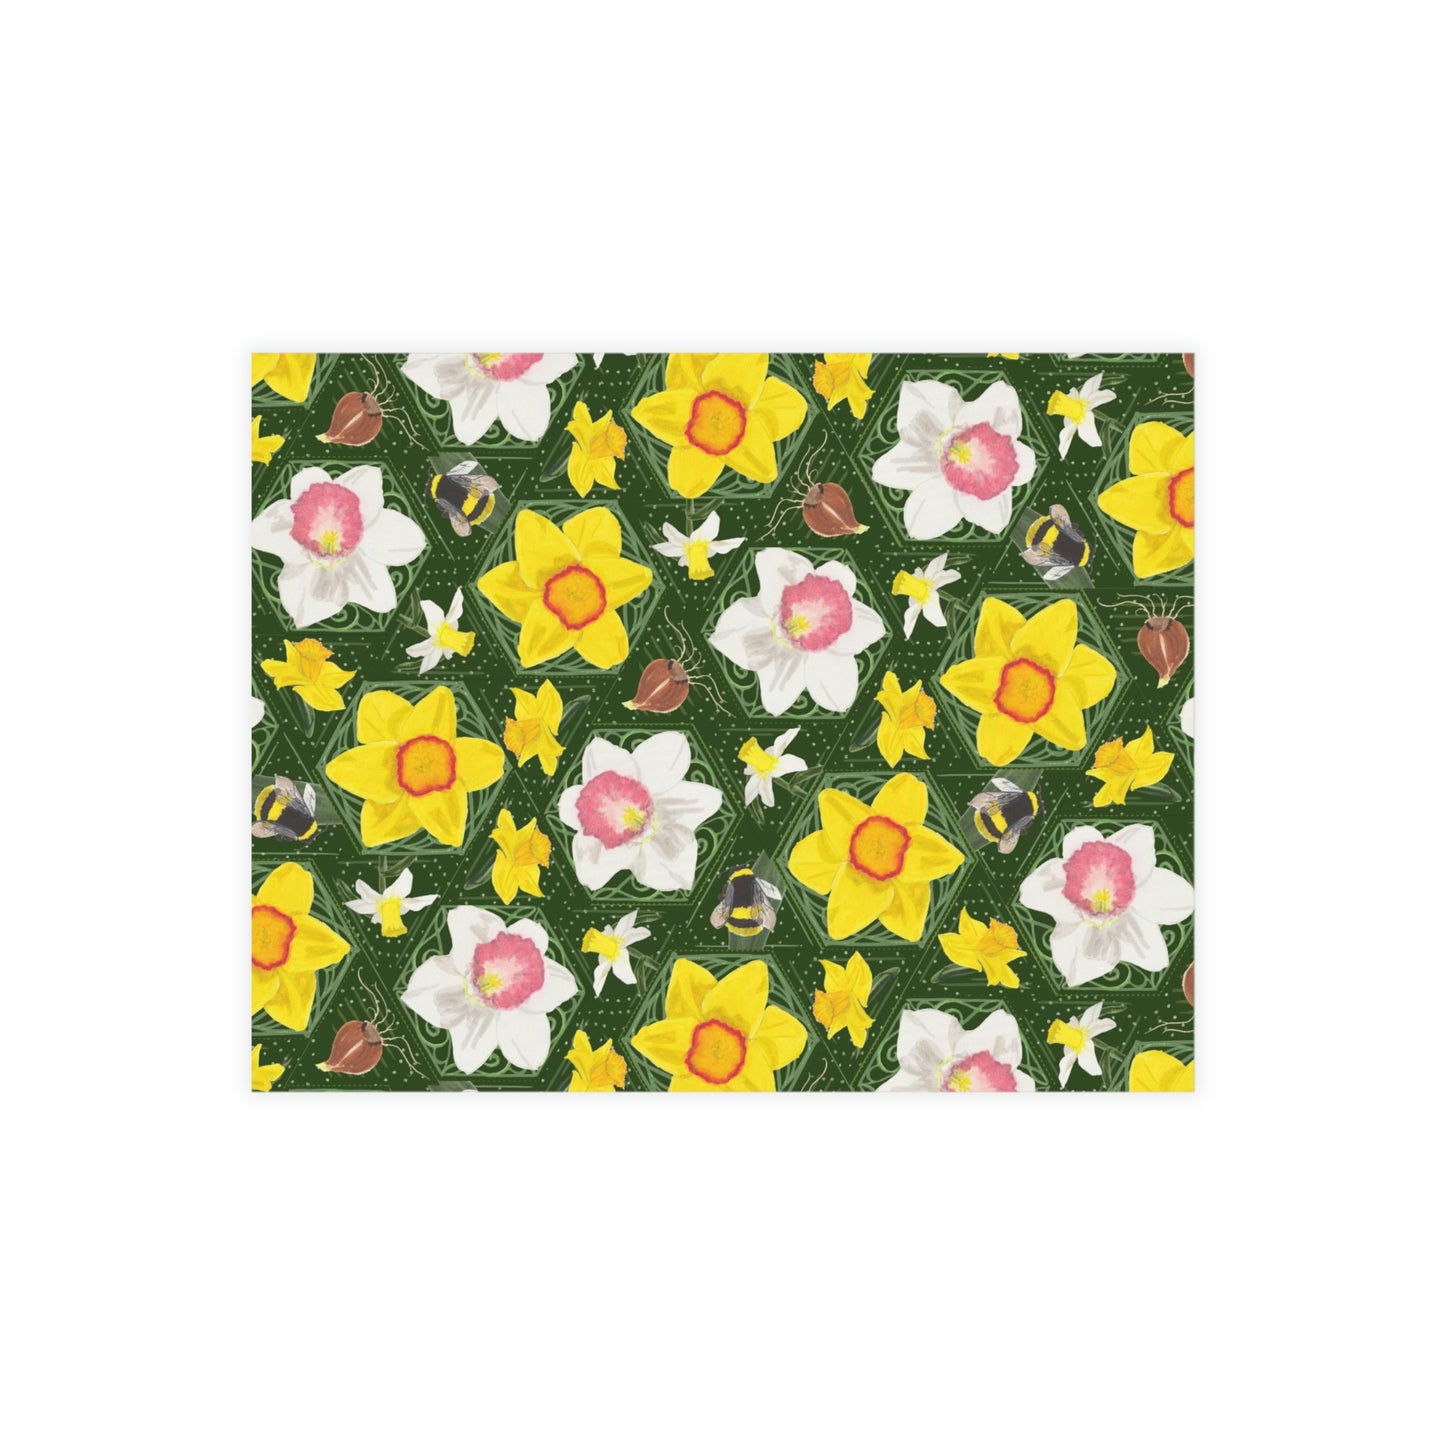 Daffodil Festival Greeting Card Bundle - Art Deco Hexagon Tangle